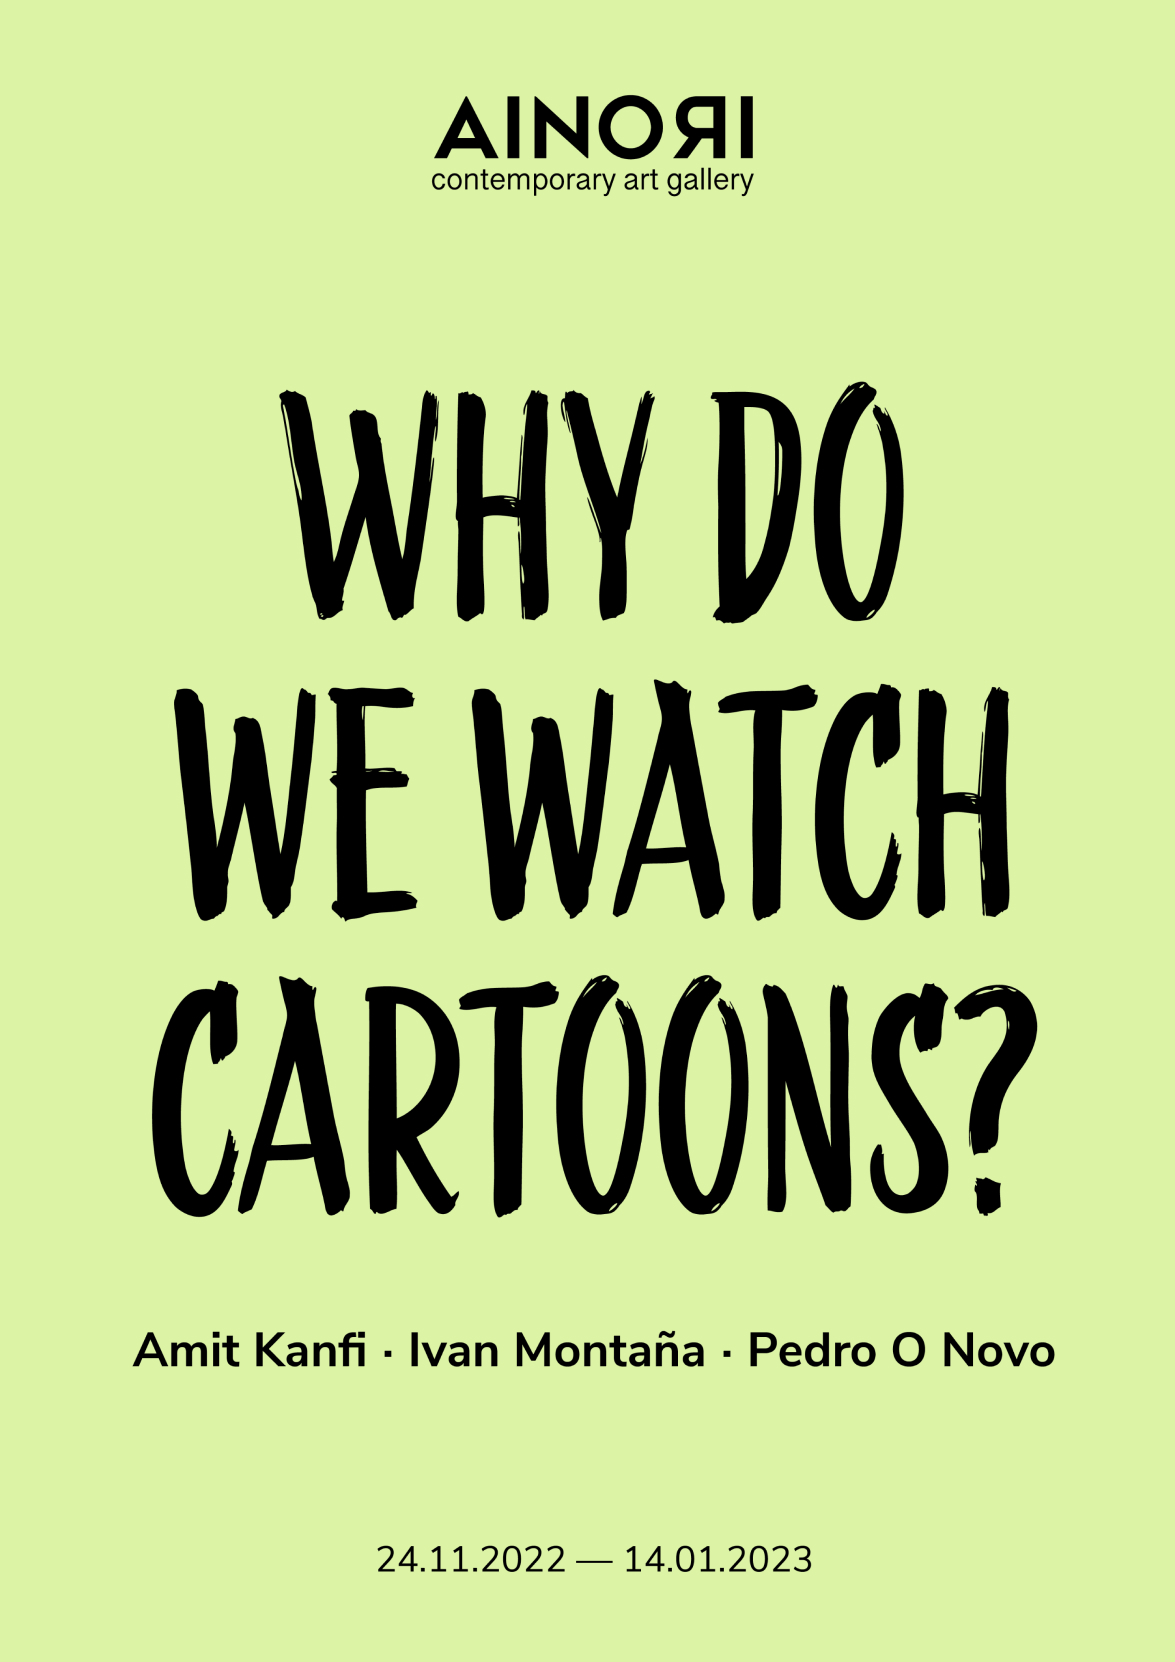 Why do we watch cartoons?